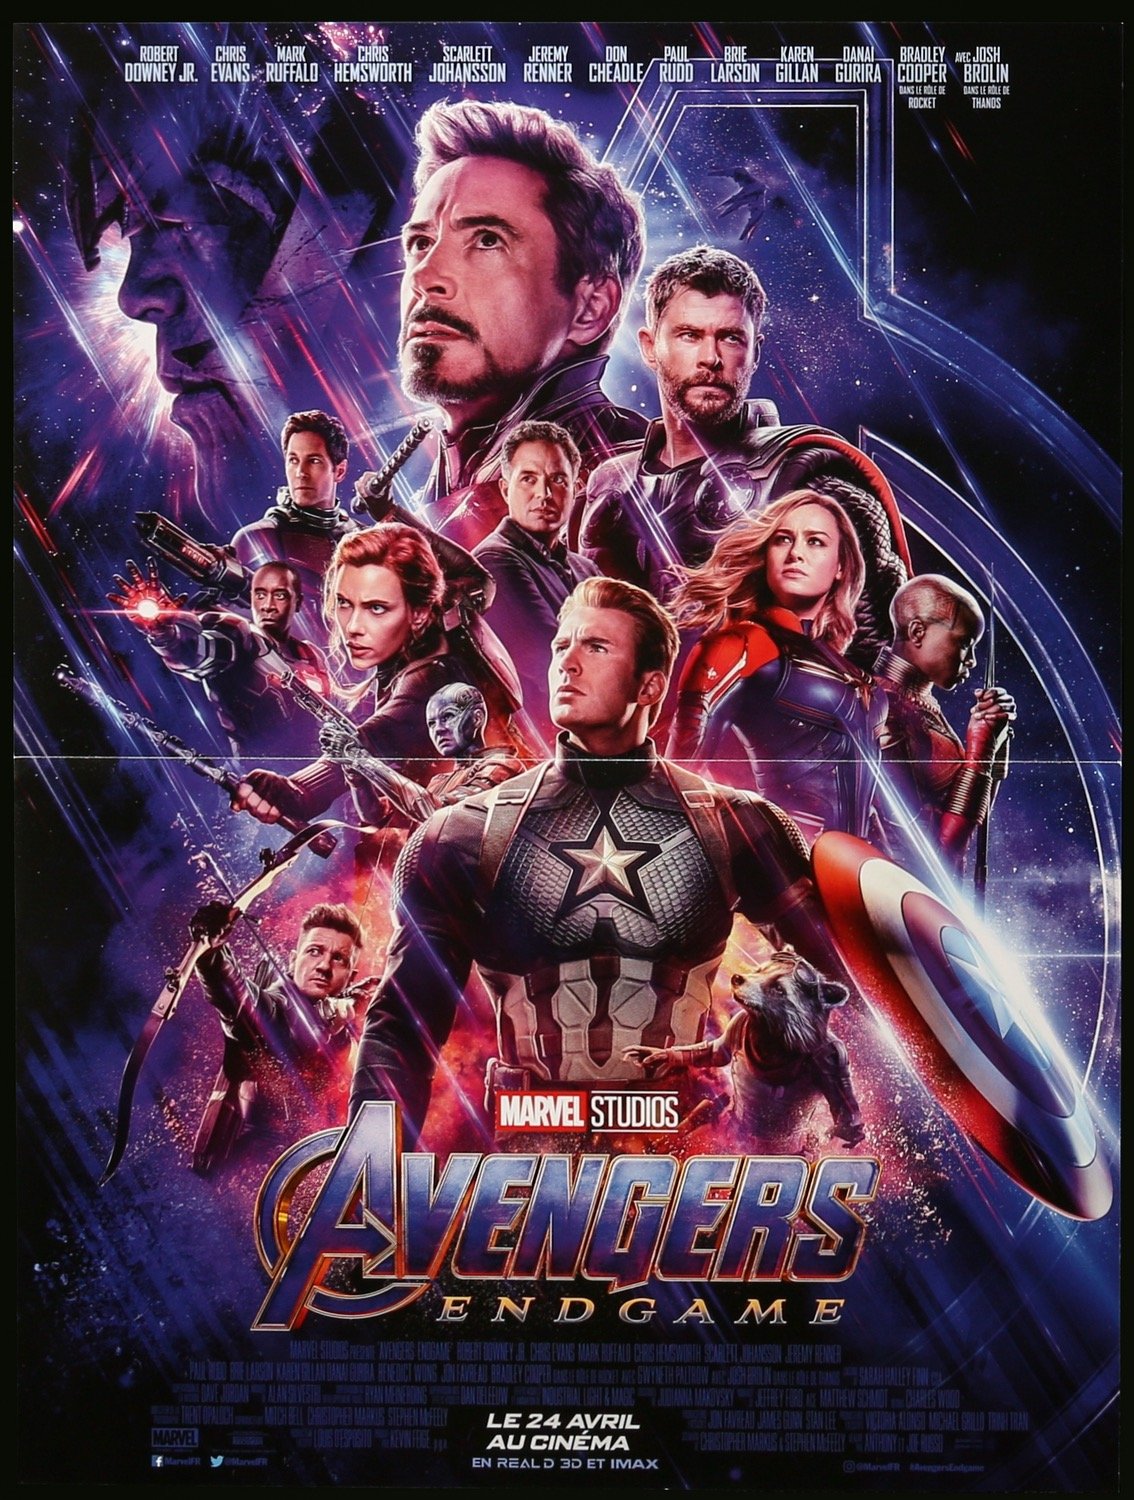 Avengers - Endgame (2019) original movie poster for sale at Original Film Art